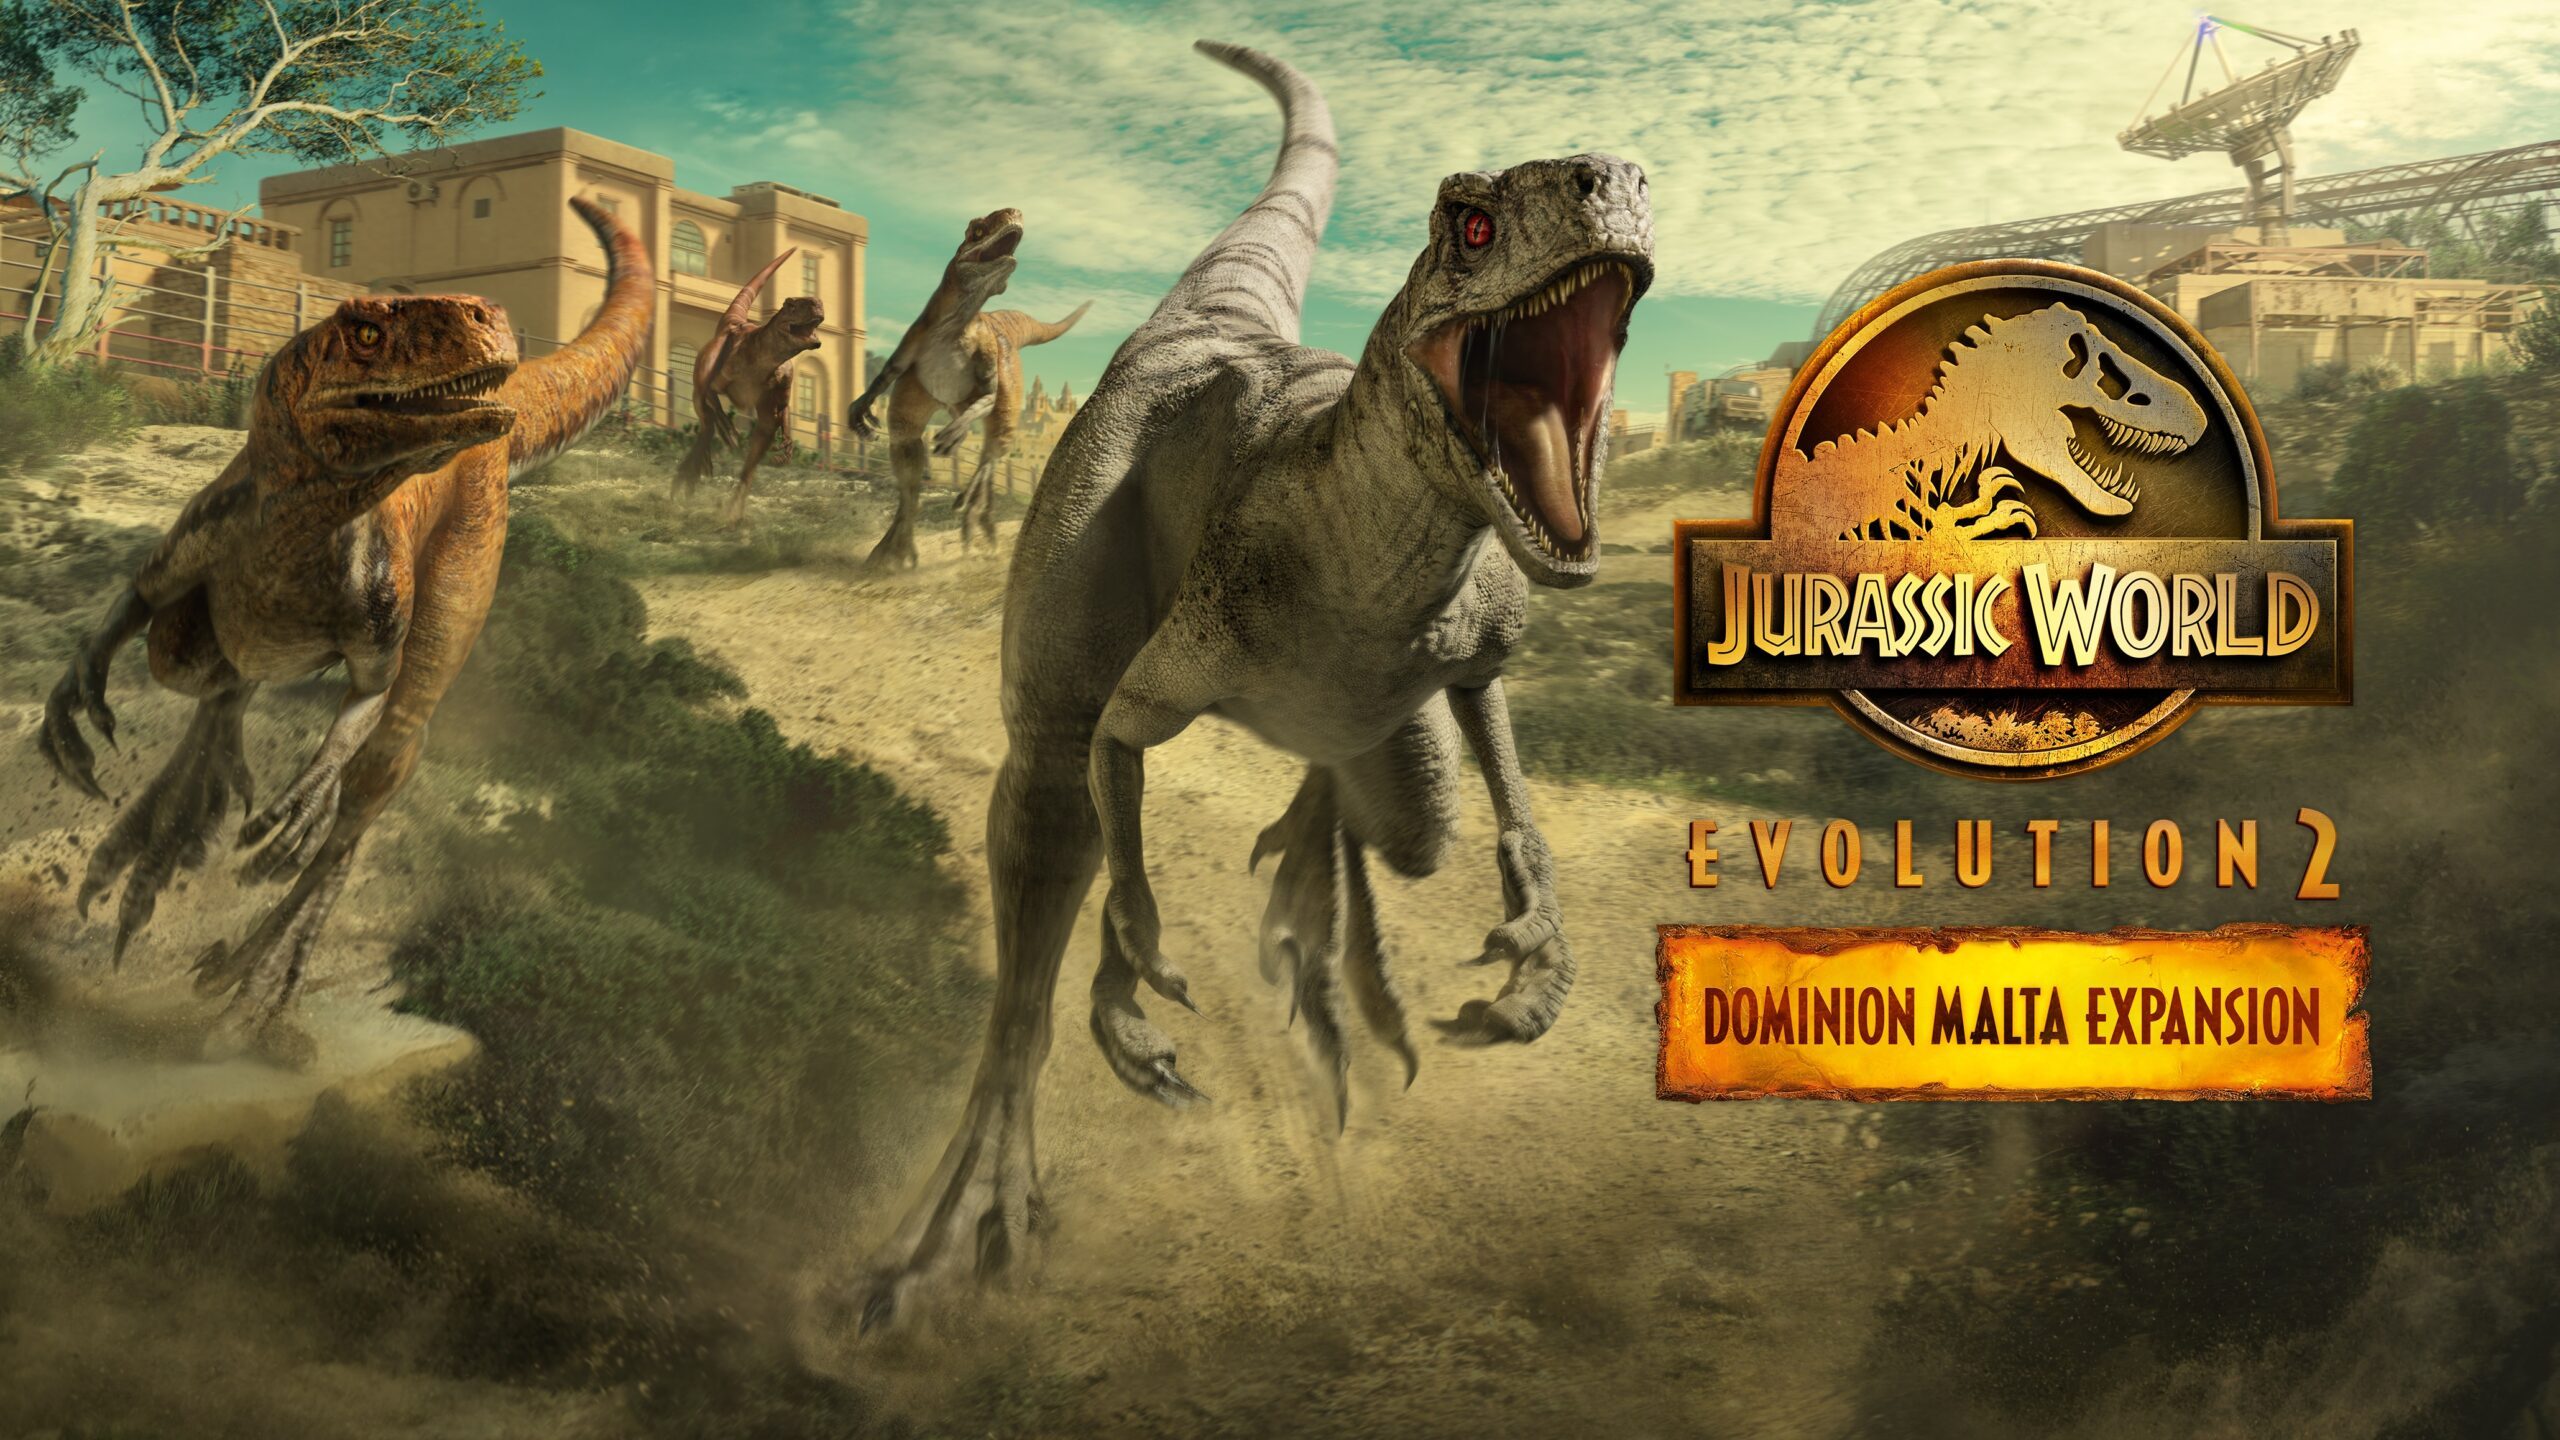 Jurassic World Evolution 2: Dominion Malta Expansion launches December 8 – PlayStation.Blog